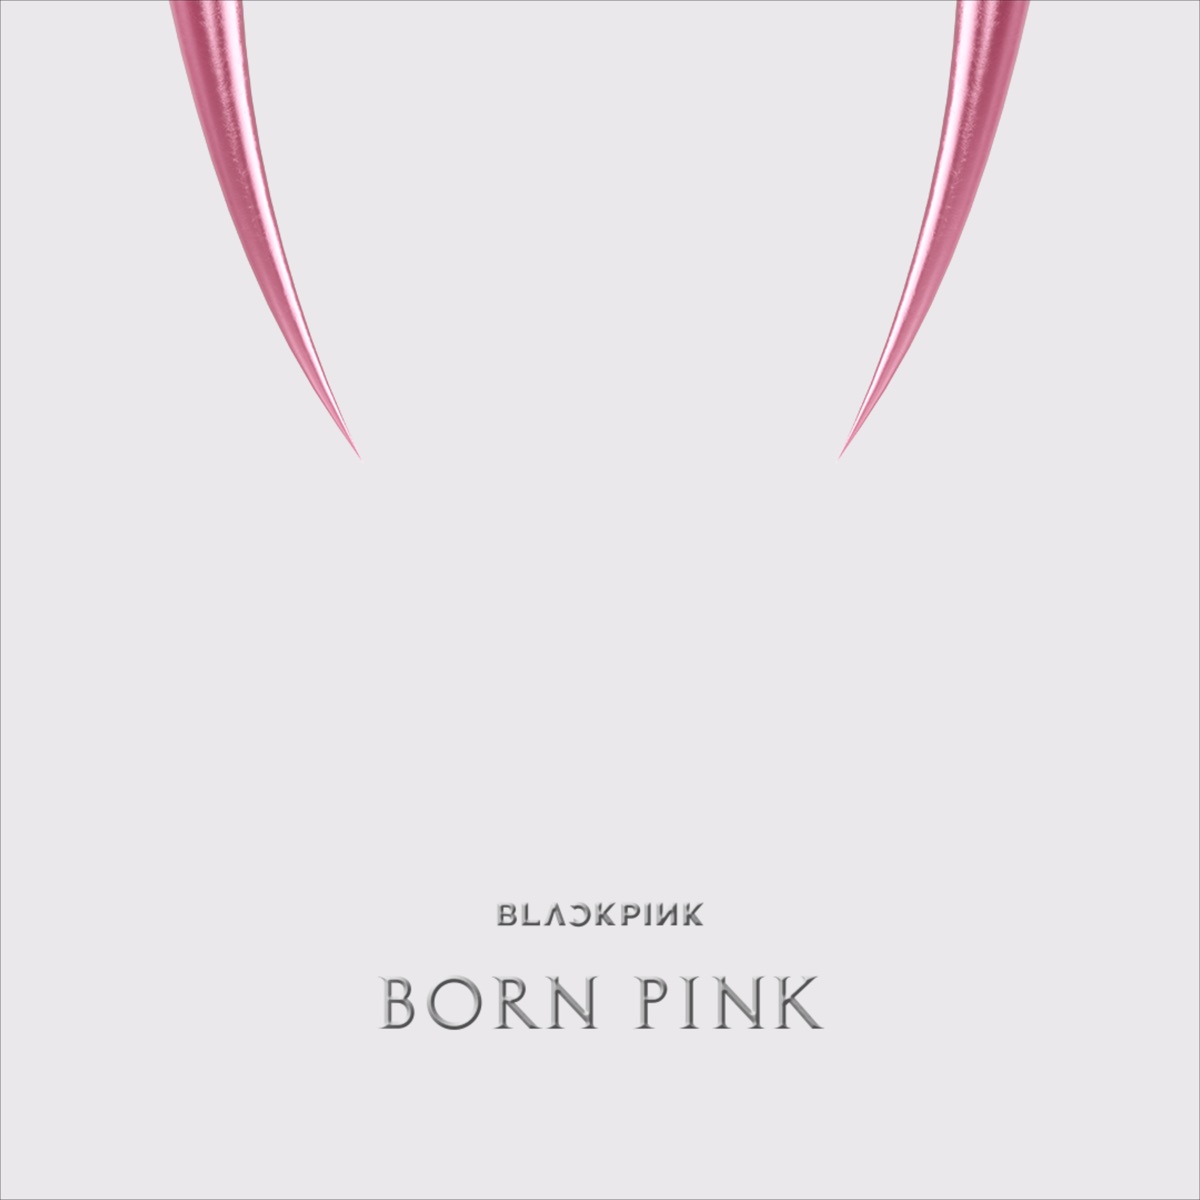 『BLACKPINK - Shut Down』収録の『BORN PINK』ジャケット